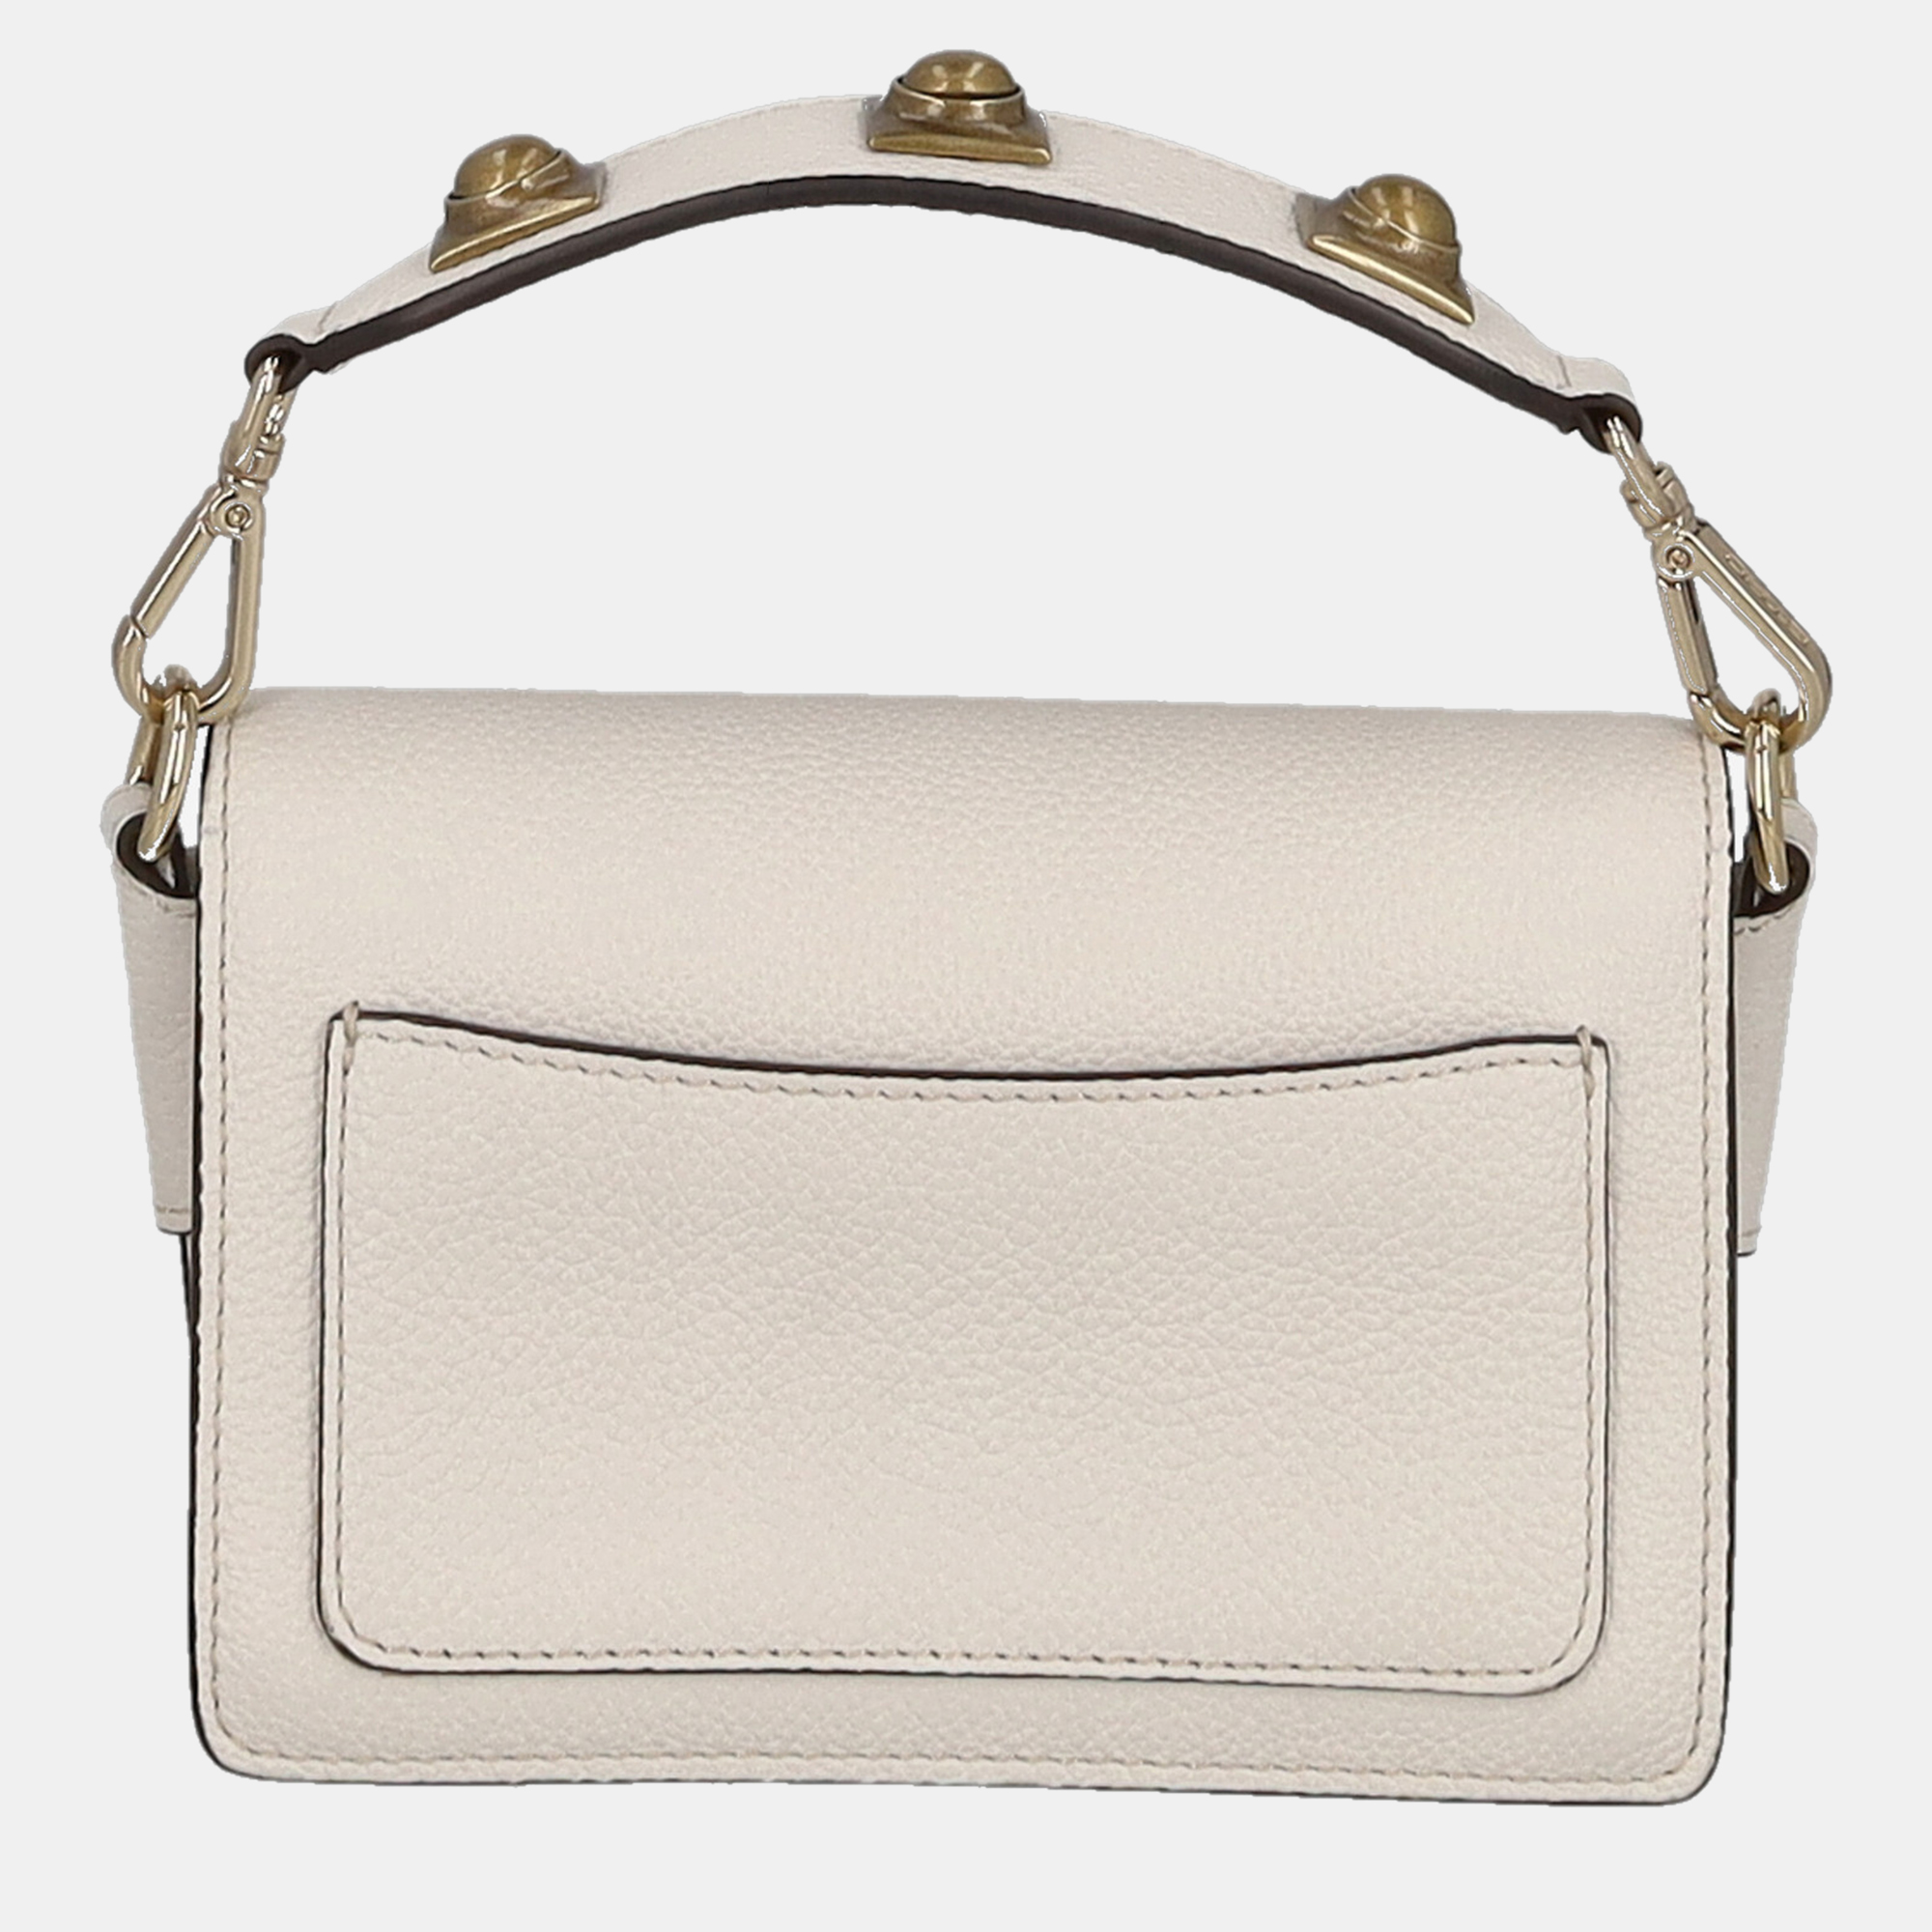 Etro  Women's Leather Shoulder Bag - White - One Size